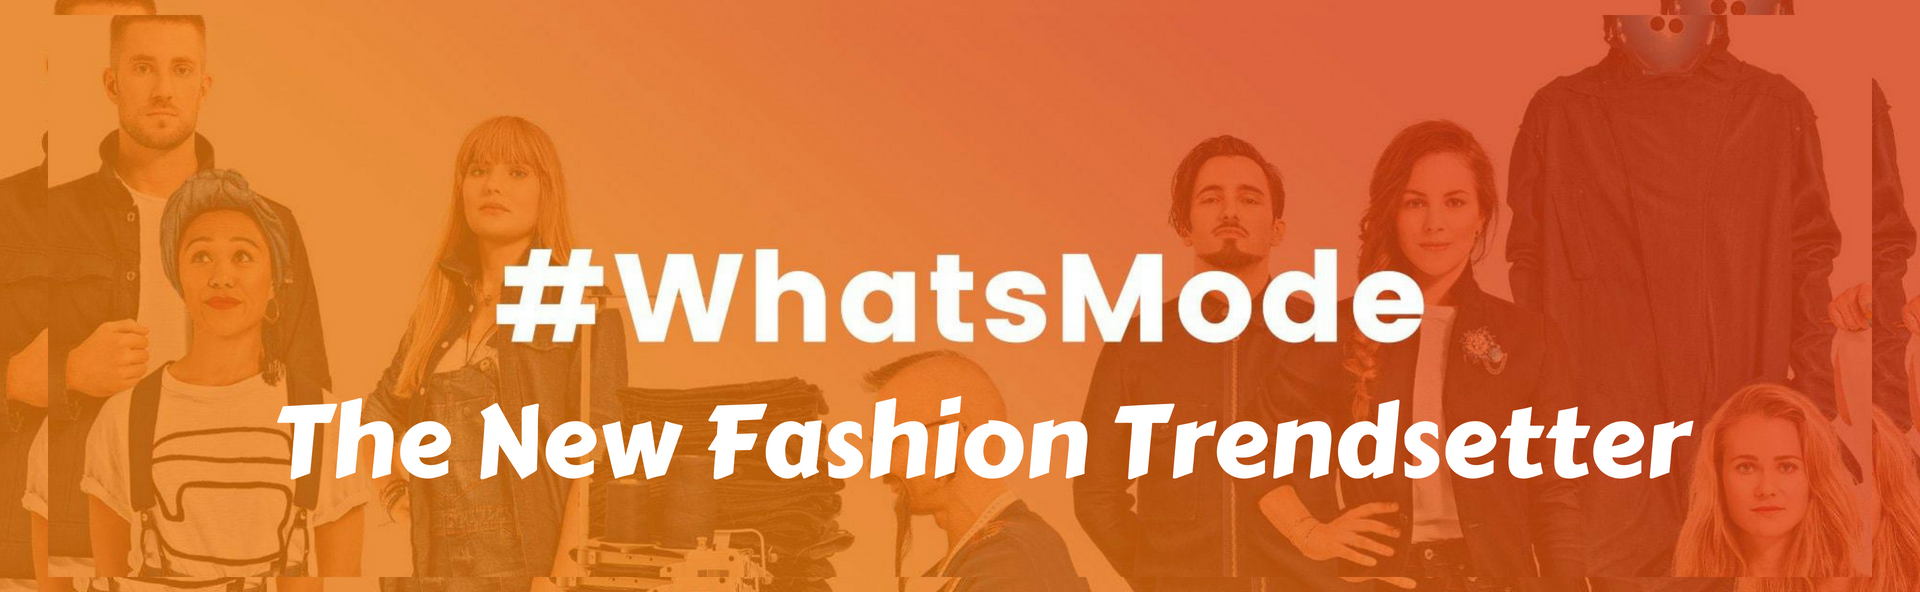 WhatsMode: The New Fashion Trendsetter